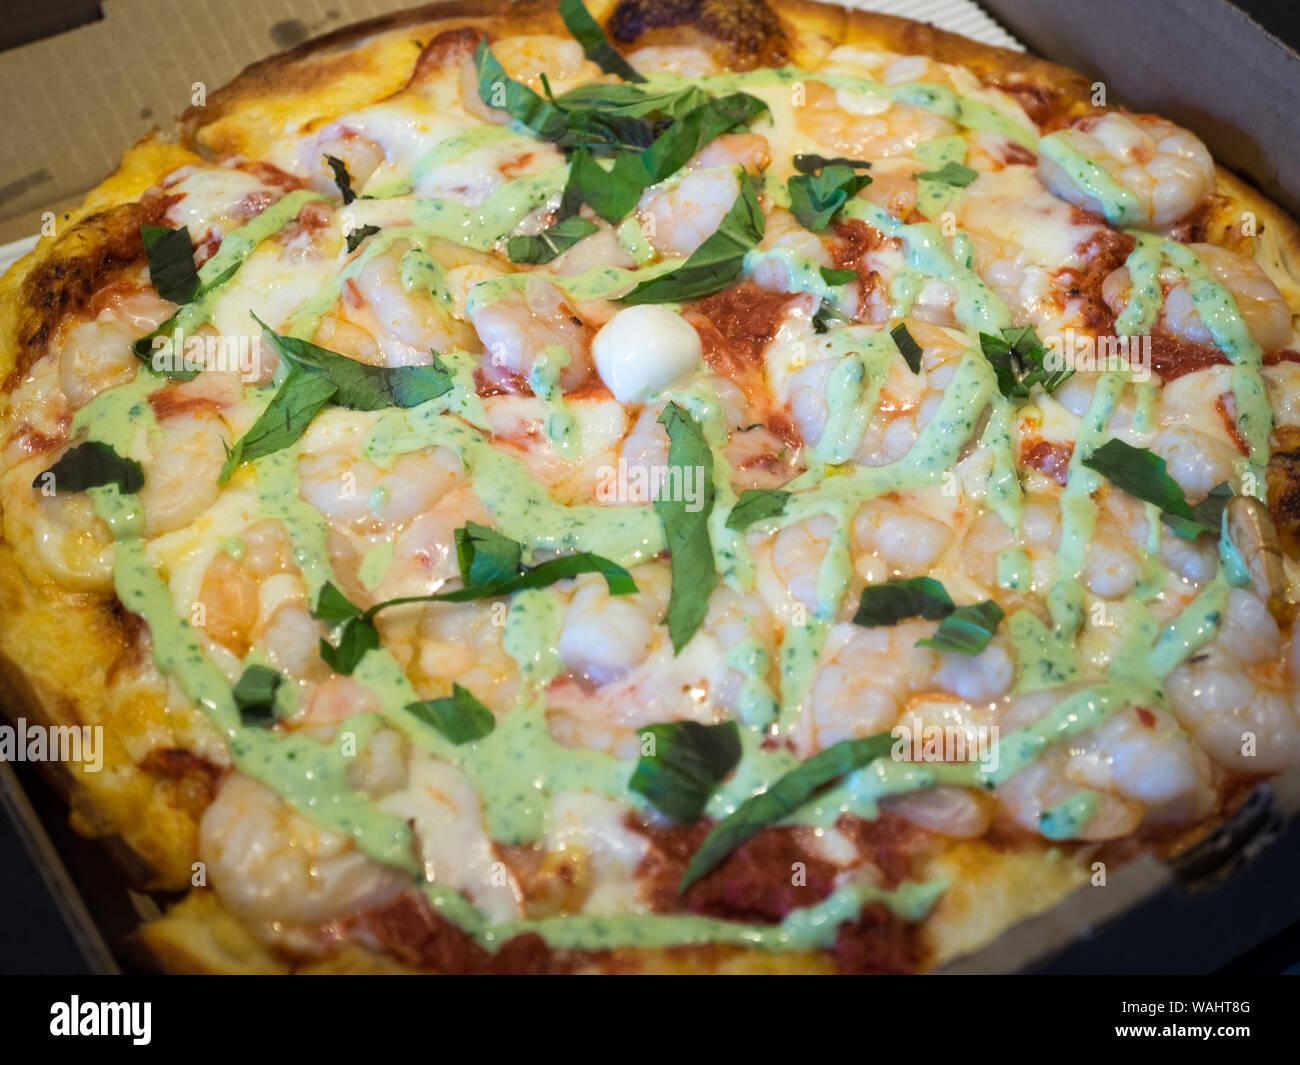 A water pizza (shrimp, crab, basil pesto) from Steveston Pizza Company in Steveston Village, Richmond, British Columbia, Canada. Stock Photo